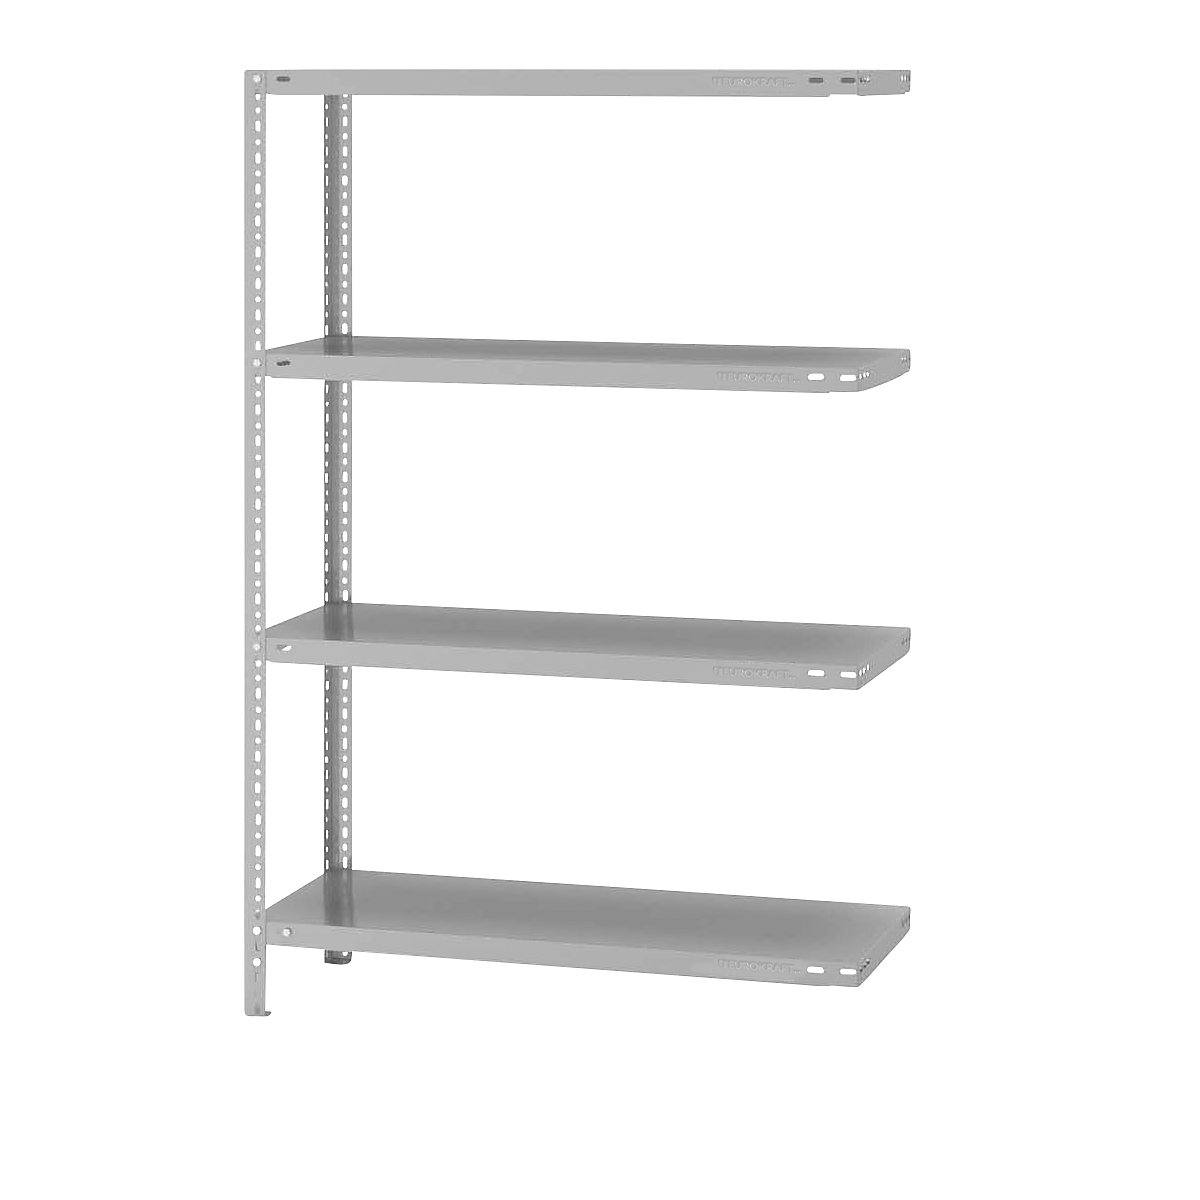 Bolt-together shelf unit, light duty, plastic coated – eurokraft pro, shelf unit height 1500 mm, shelf width 1000 mm, depth 400 mm, extension shelf unit-12